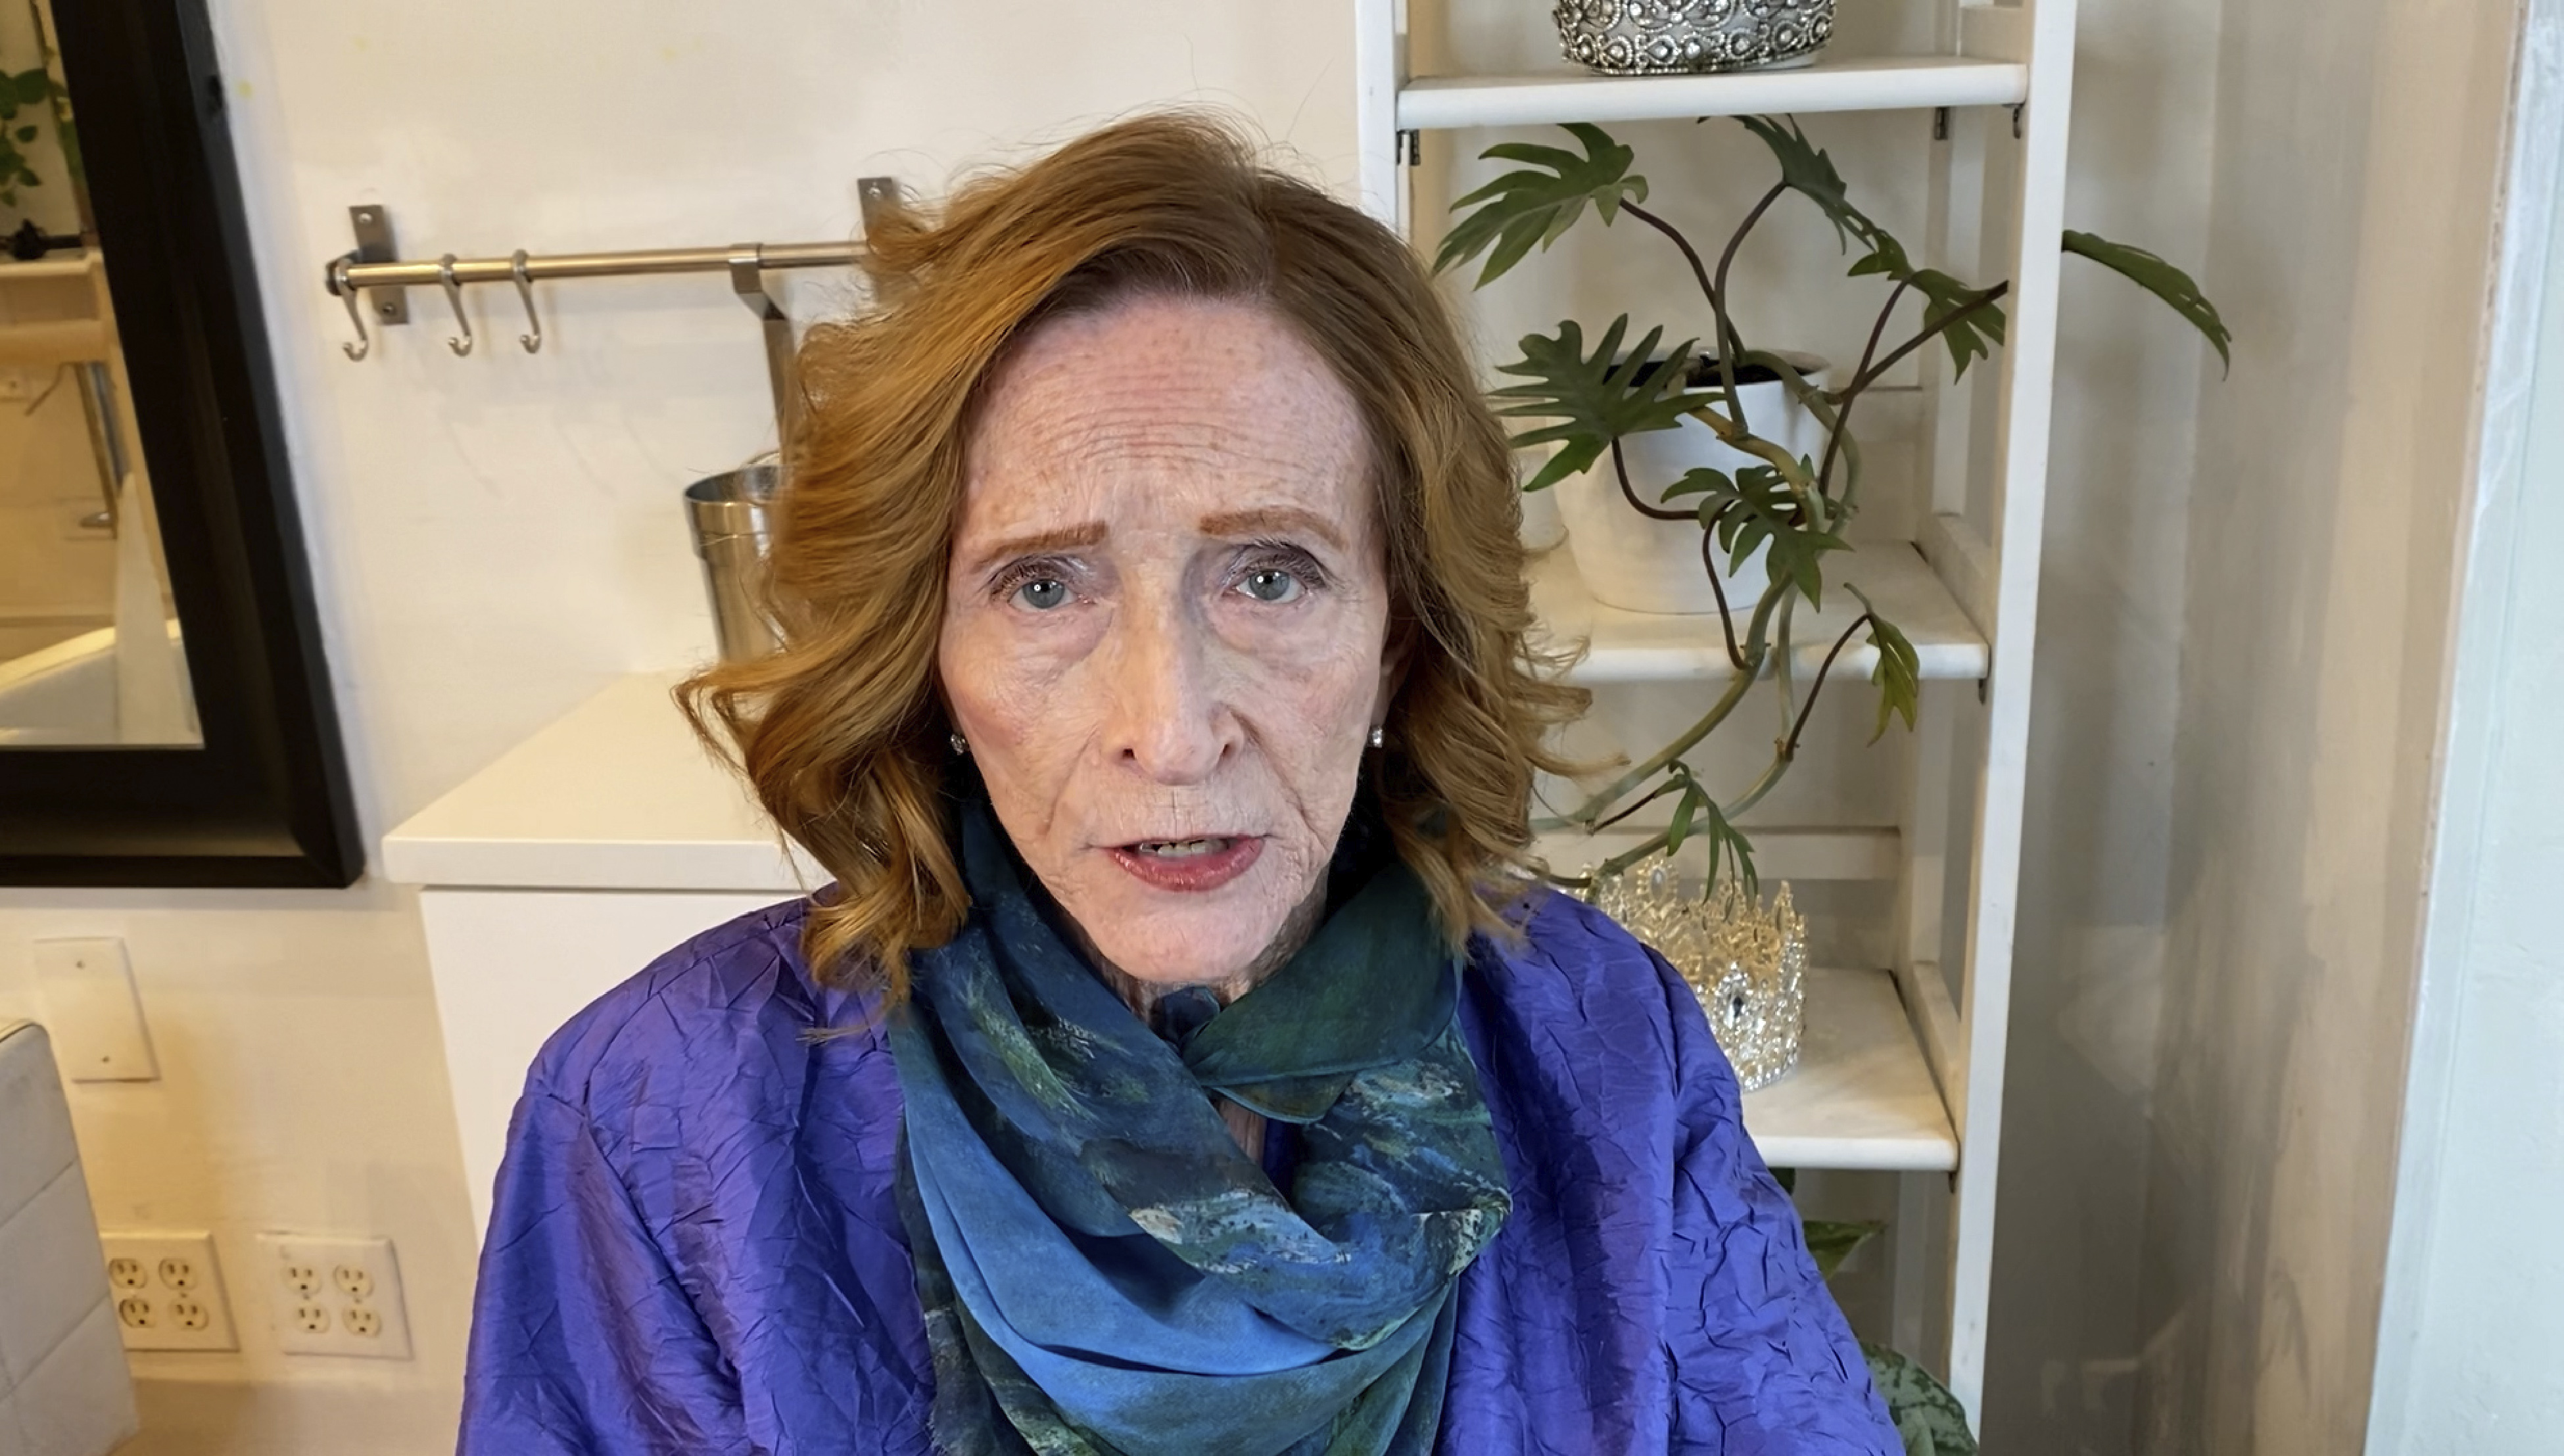 Ginger Lane, a Holocaust survivor, participates in the video